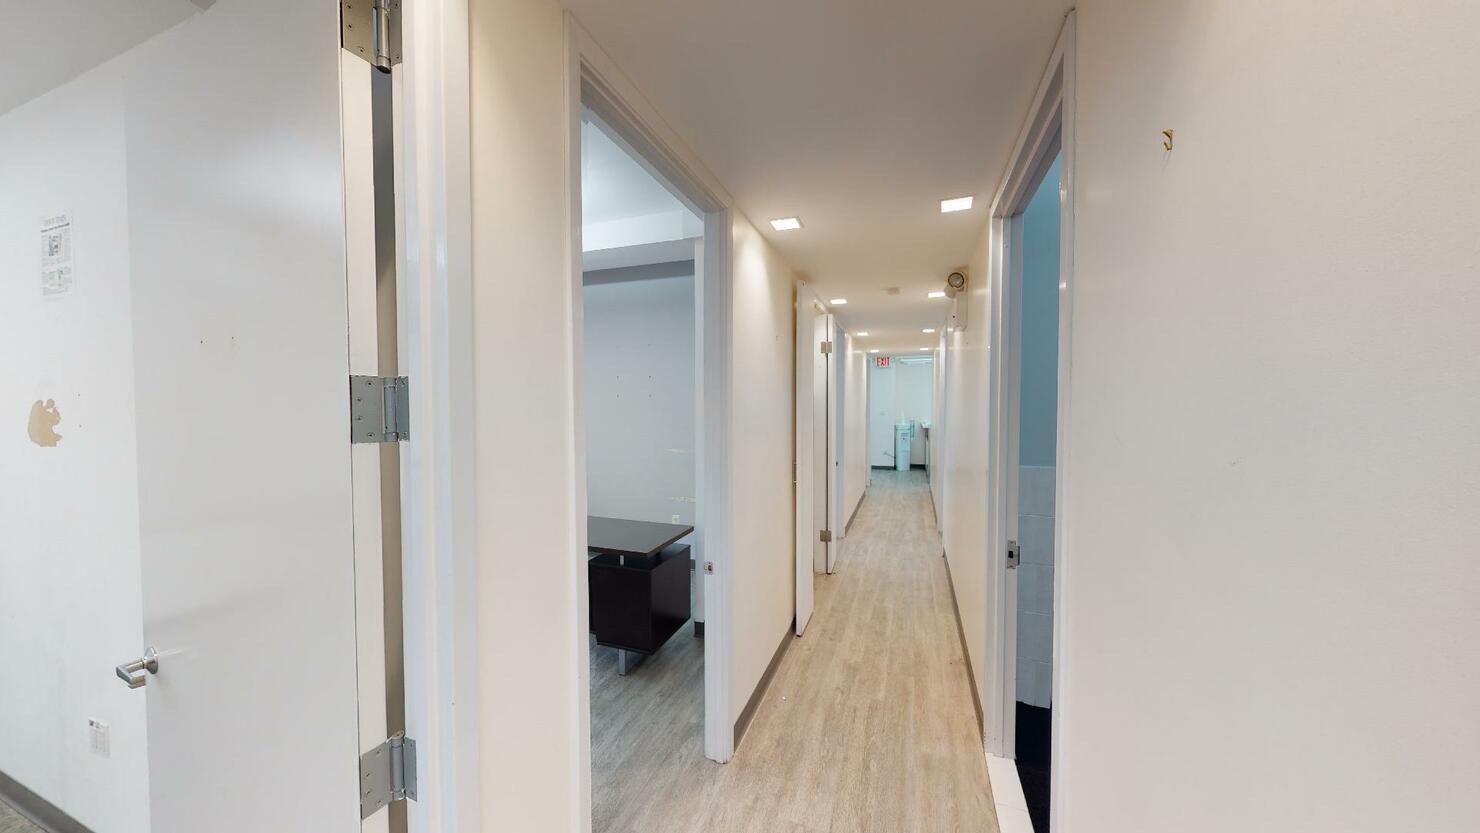 369 Lexington Avenue Office Space - Hallway